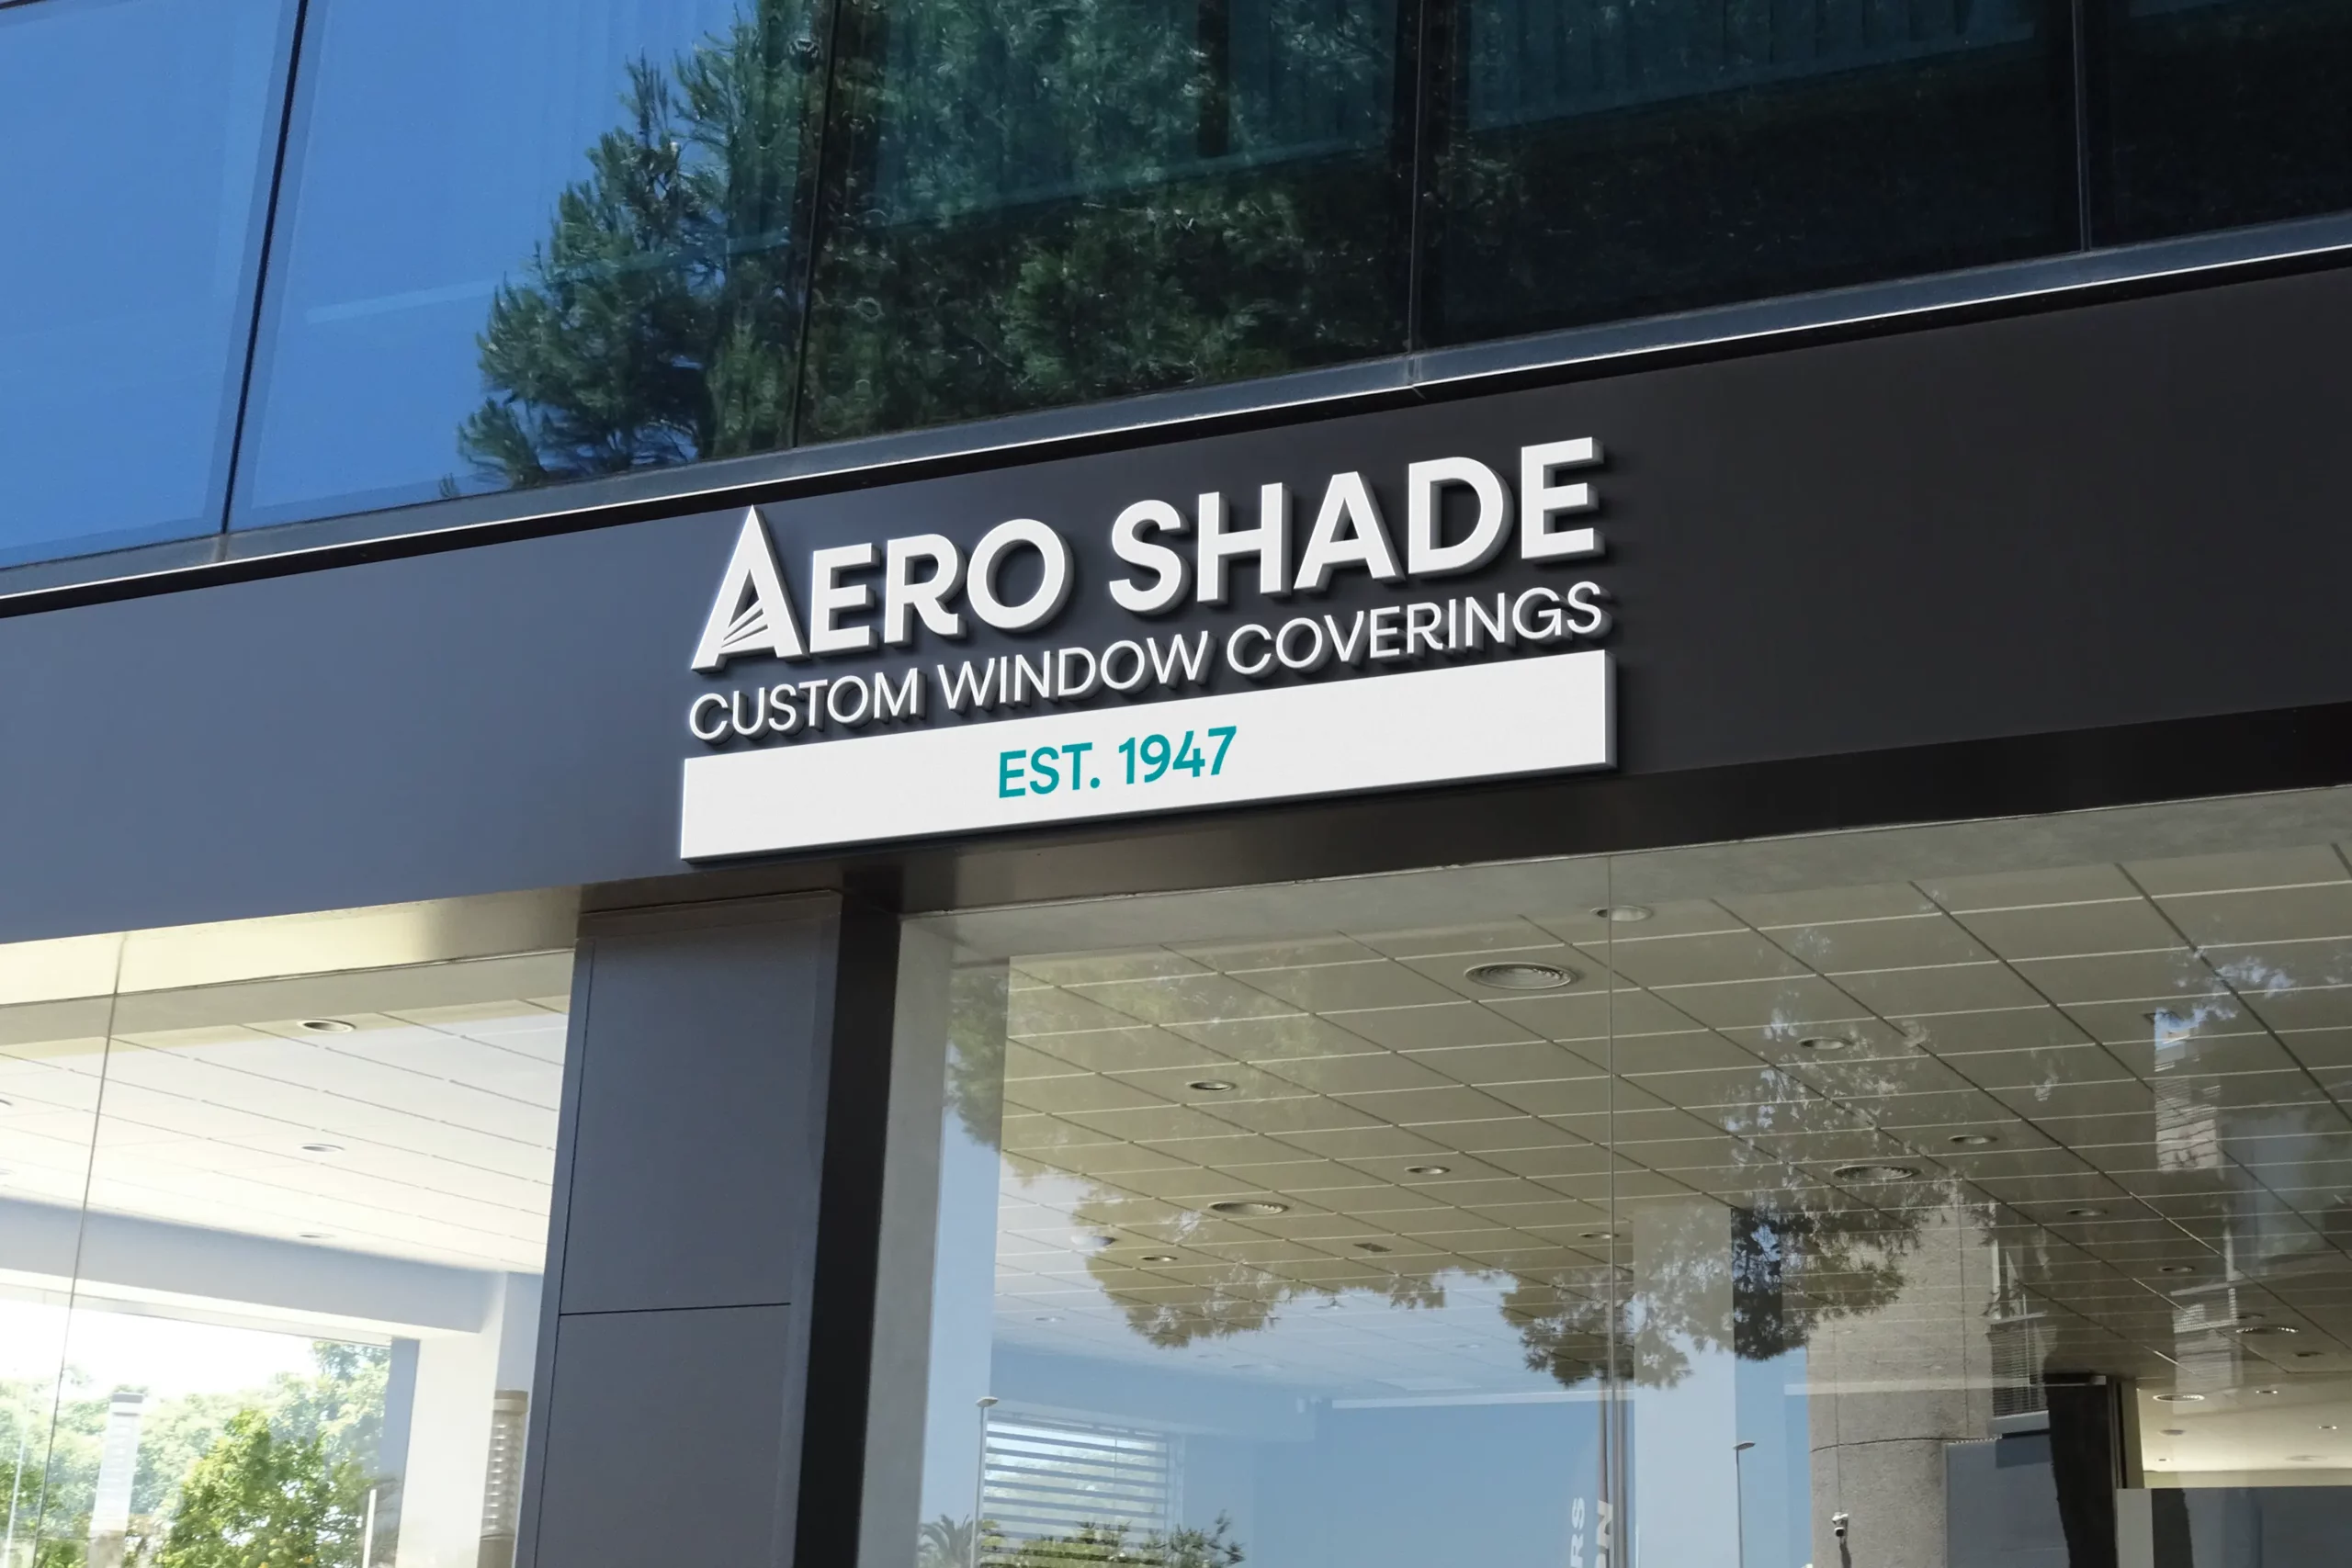 Aero Shade Custom Window Coverings - Established 1947